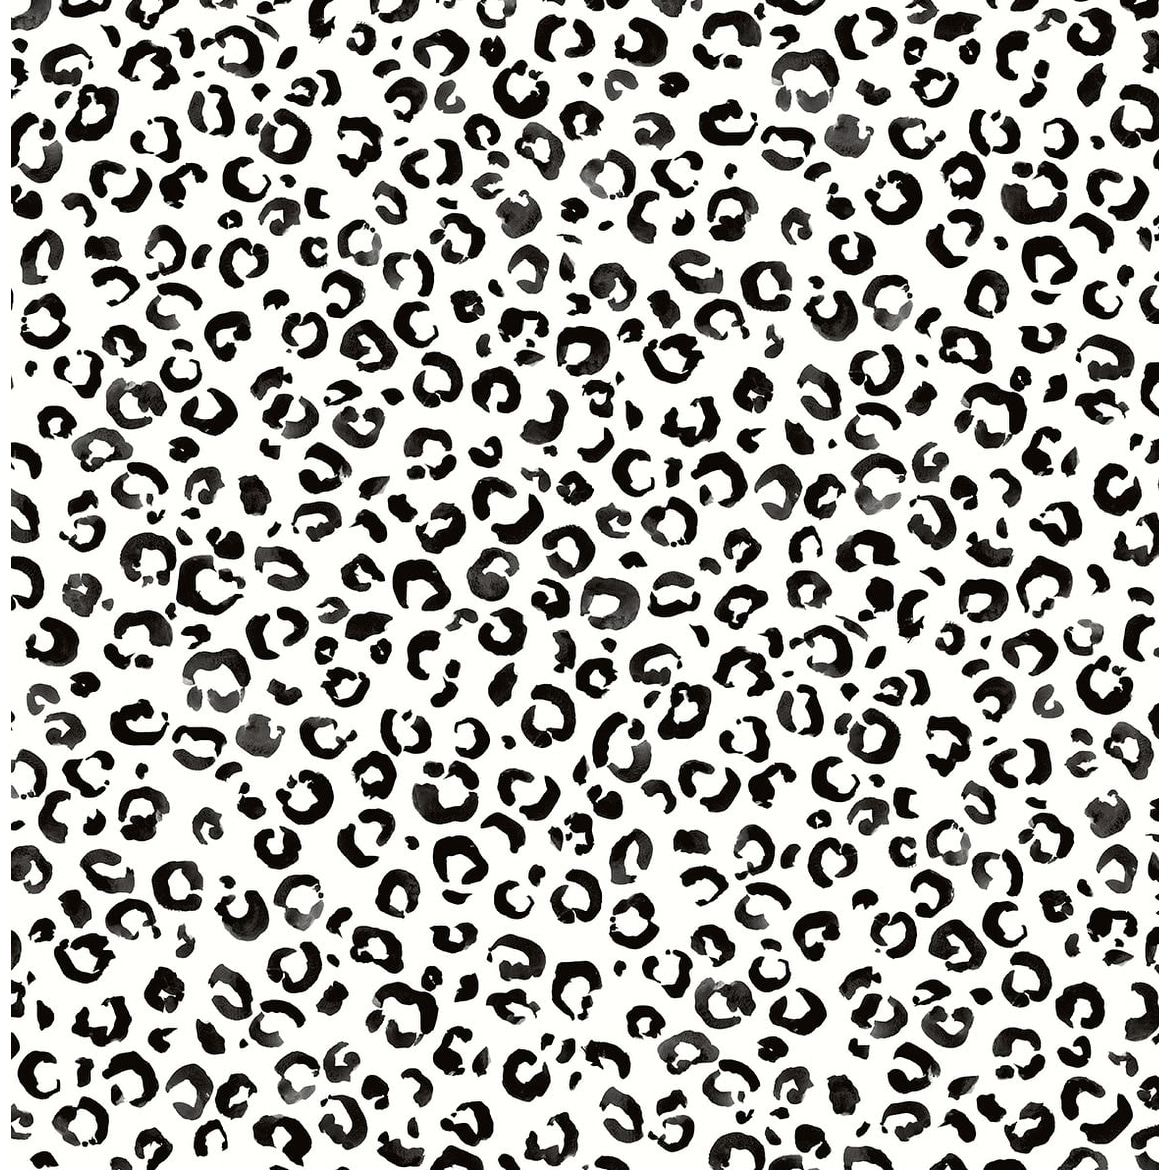 Animal Print Leopard Wallpaper, Light Grey, Repositionable